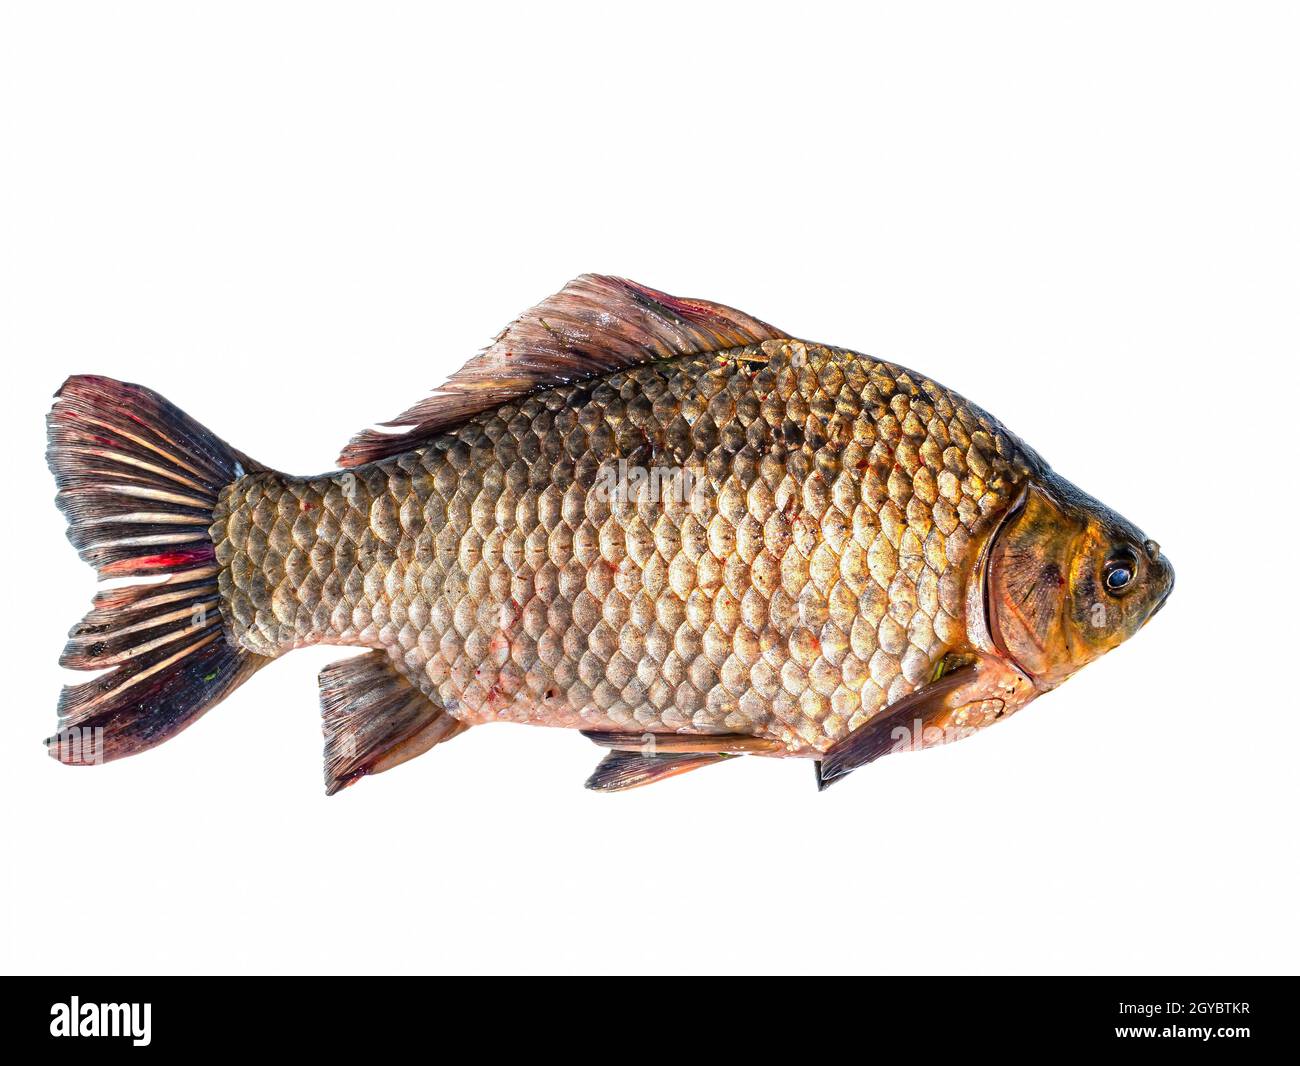 Freshwater fish crucian carp on a white background. Fish crucian